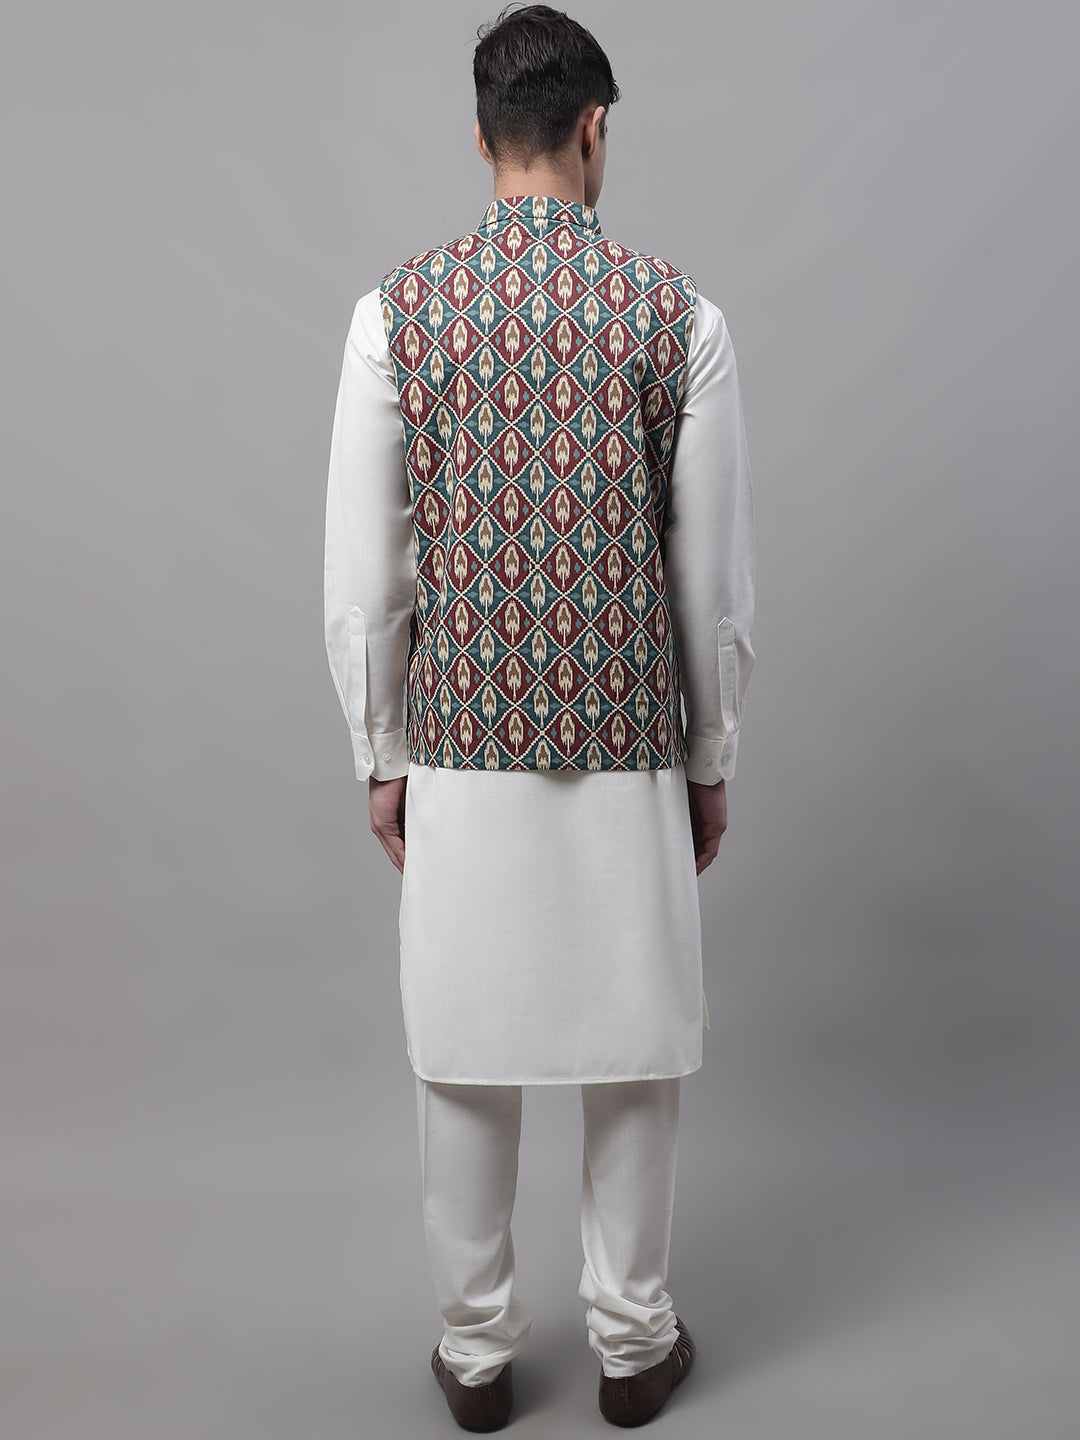 Men off-White Solid Kurta Pyjama with  Teal Blue Printed Nehru Jacket